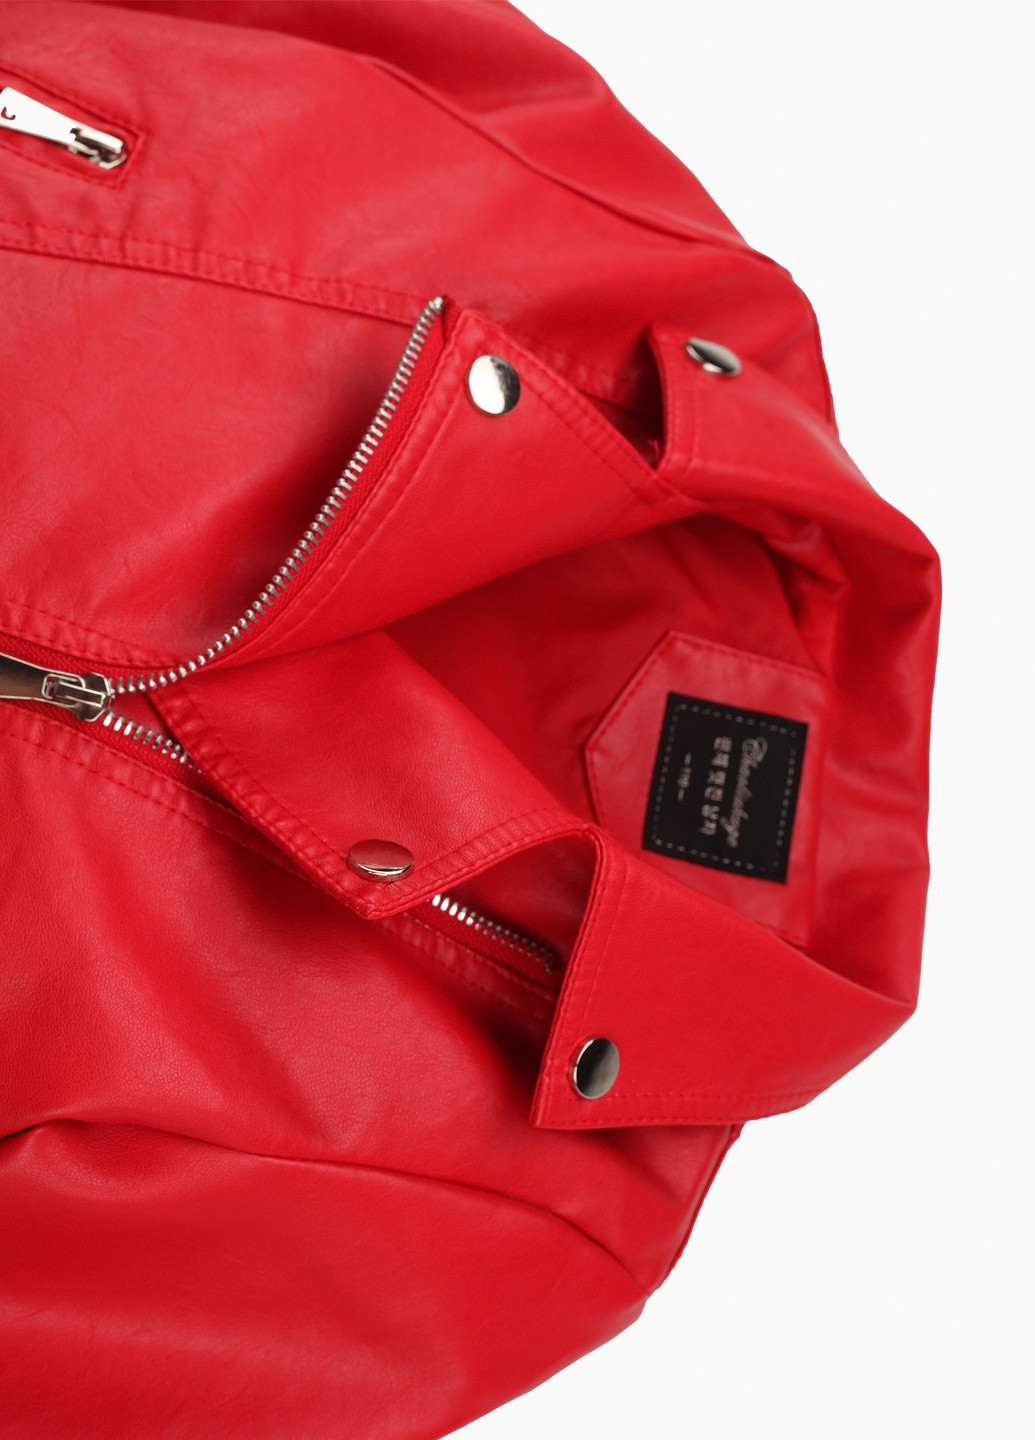 Красная демисезонная куртка XZKAMI